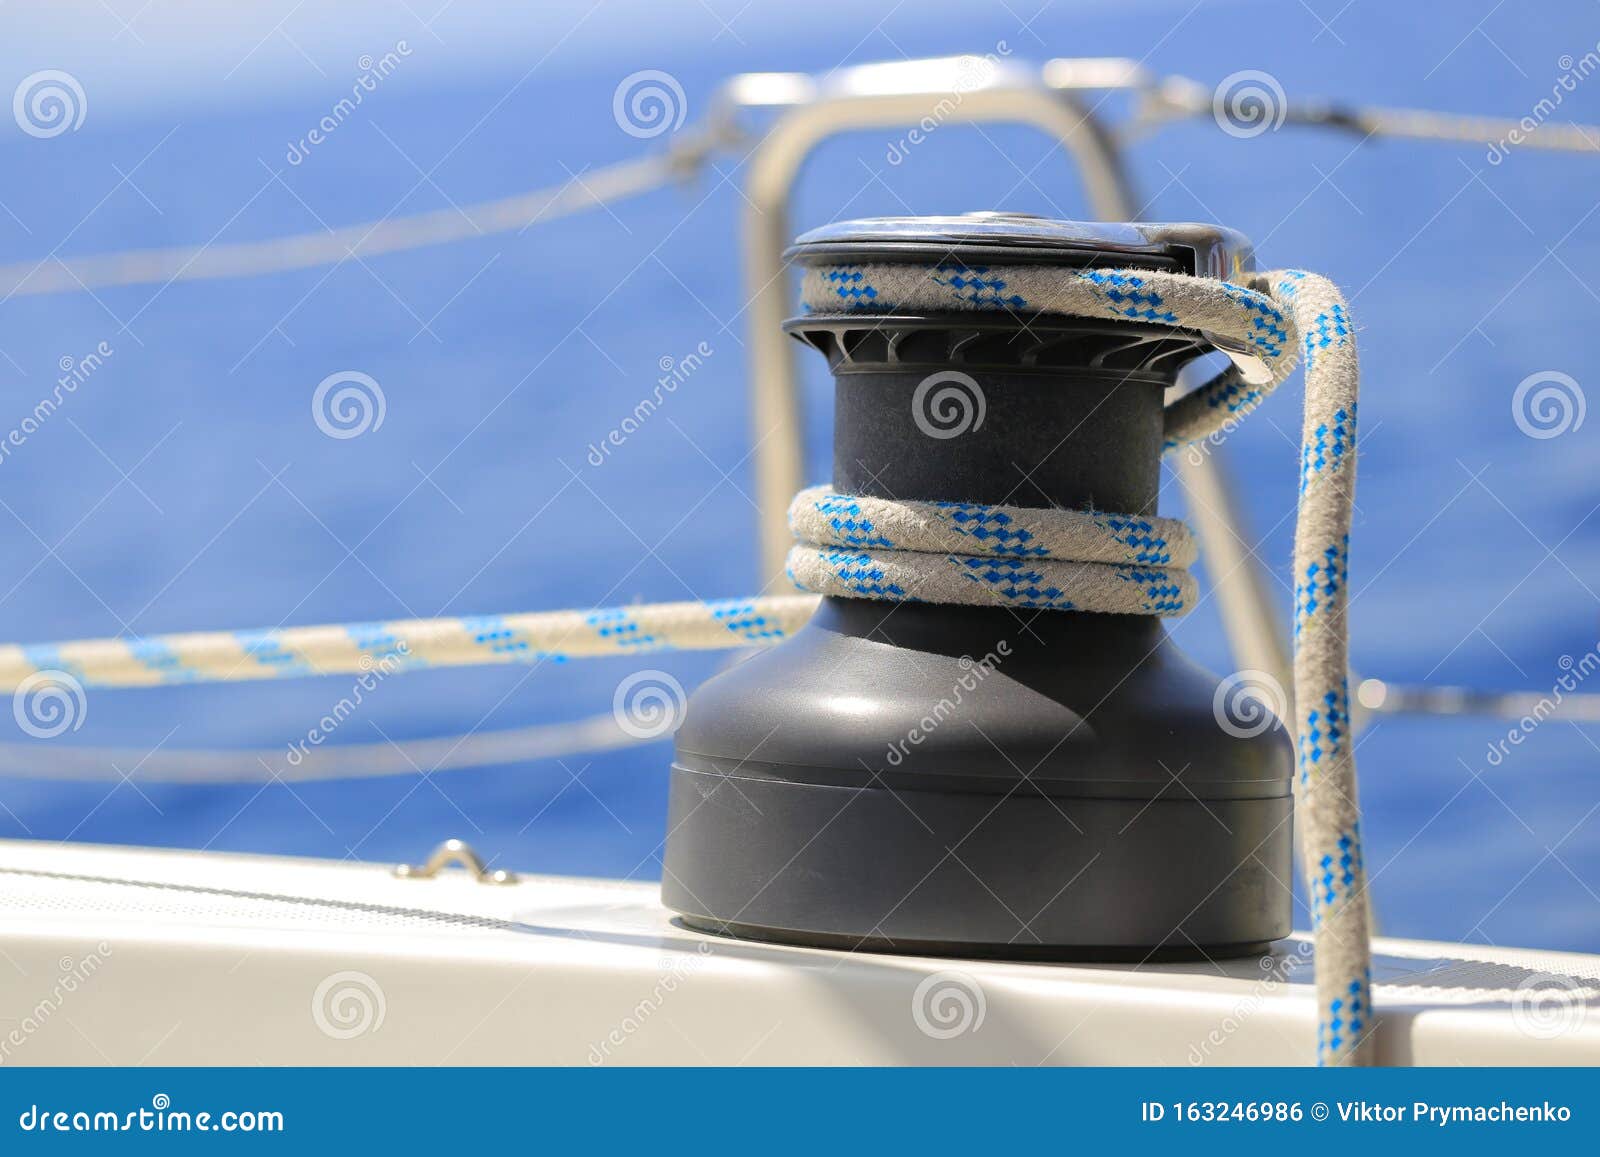 main halyard winch on sailing boat